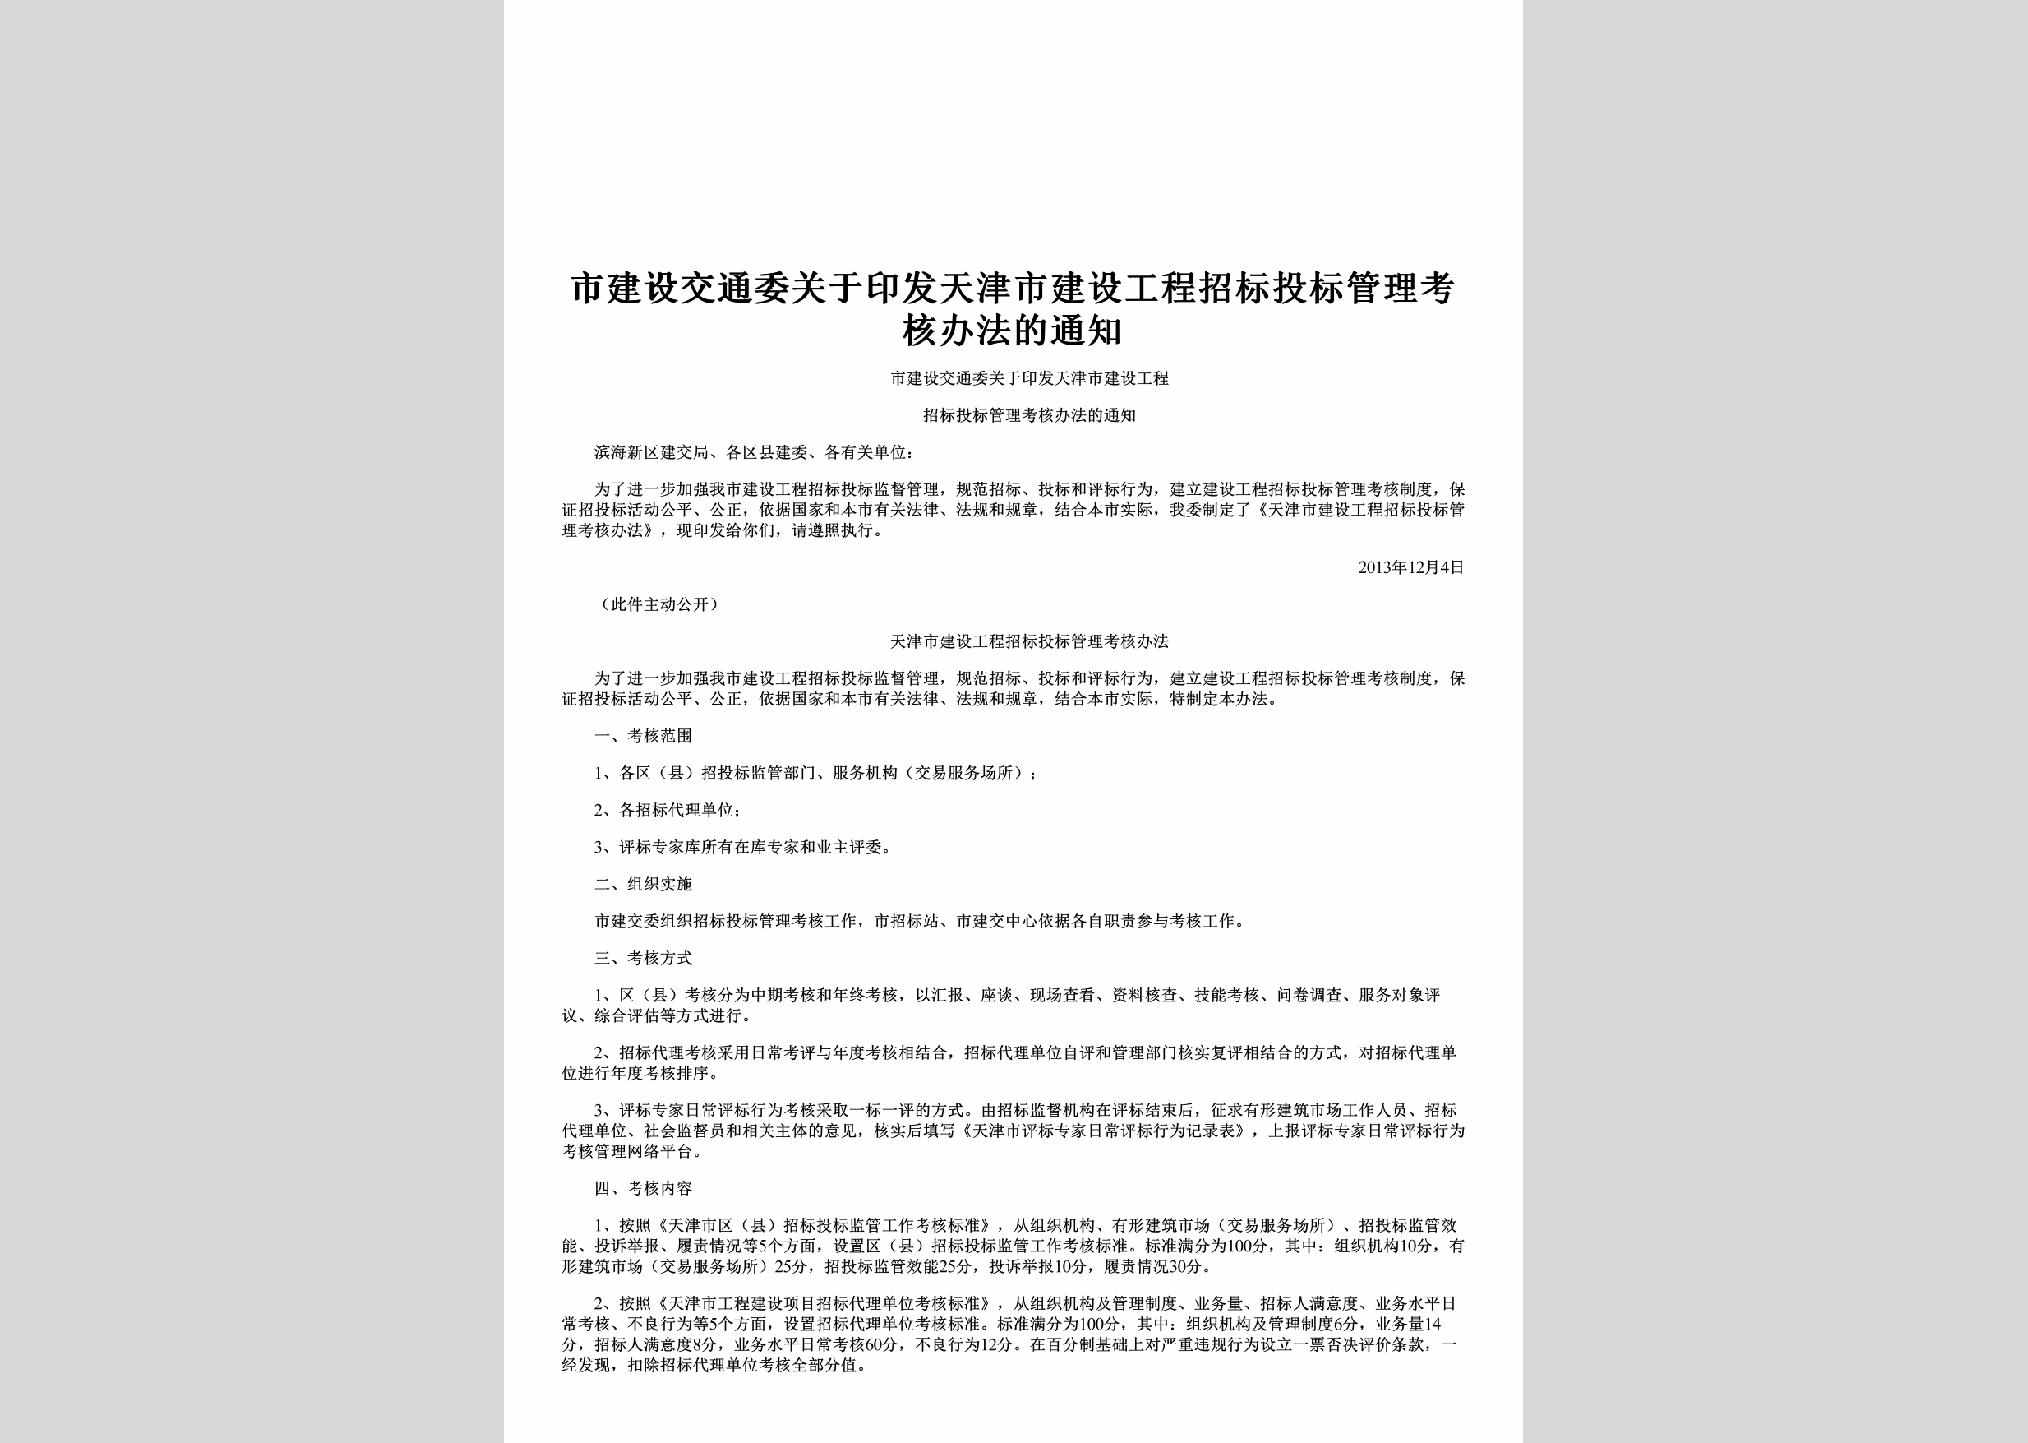 TJ-KHBFDTZ-2013：关于印发天津市建设工程招标投标管理考核办法的通知